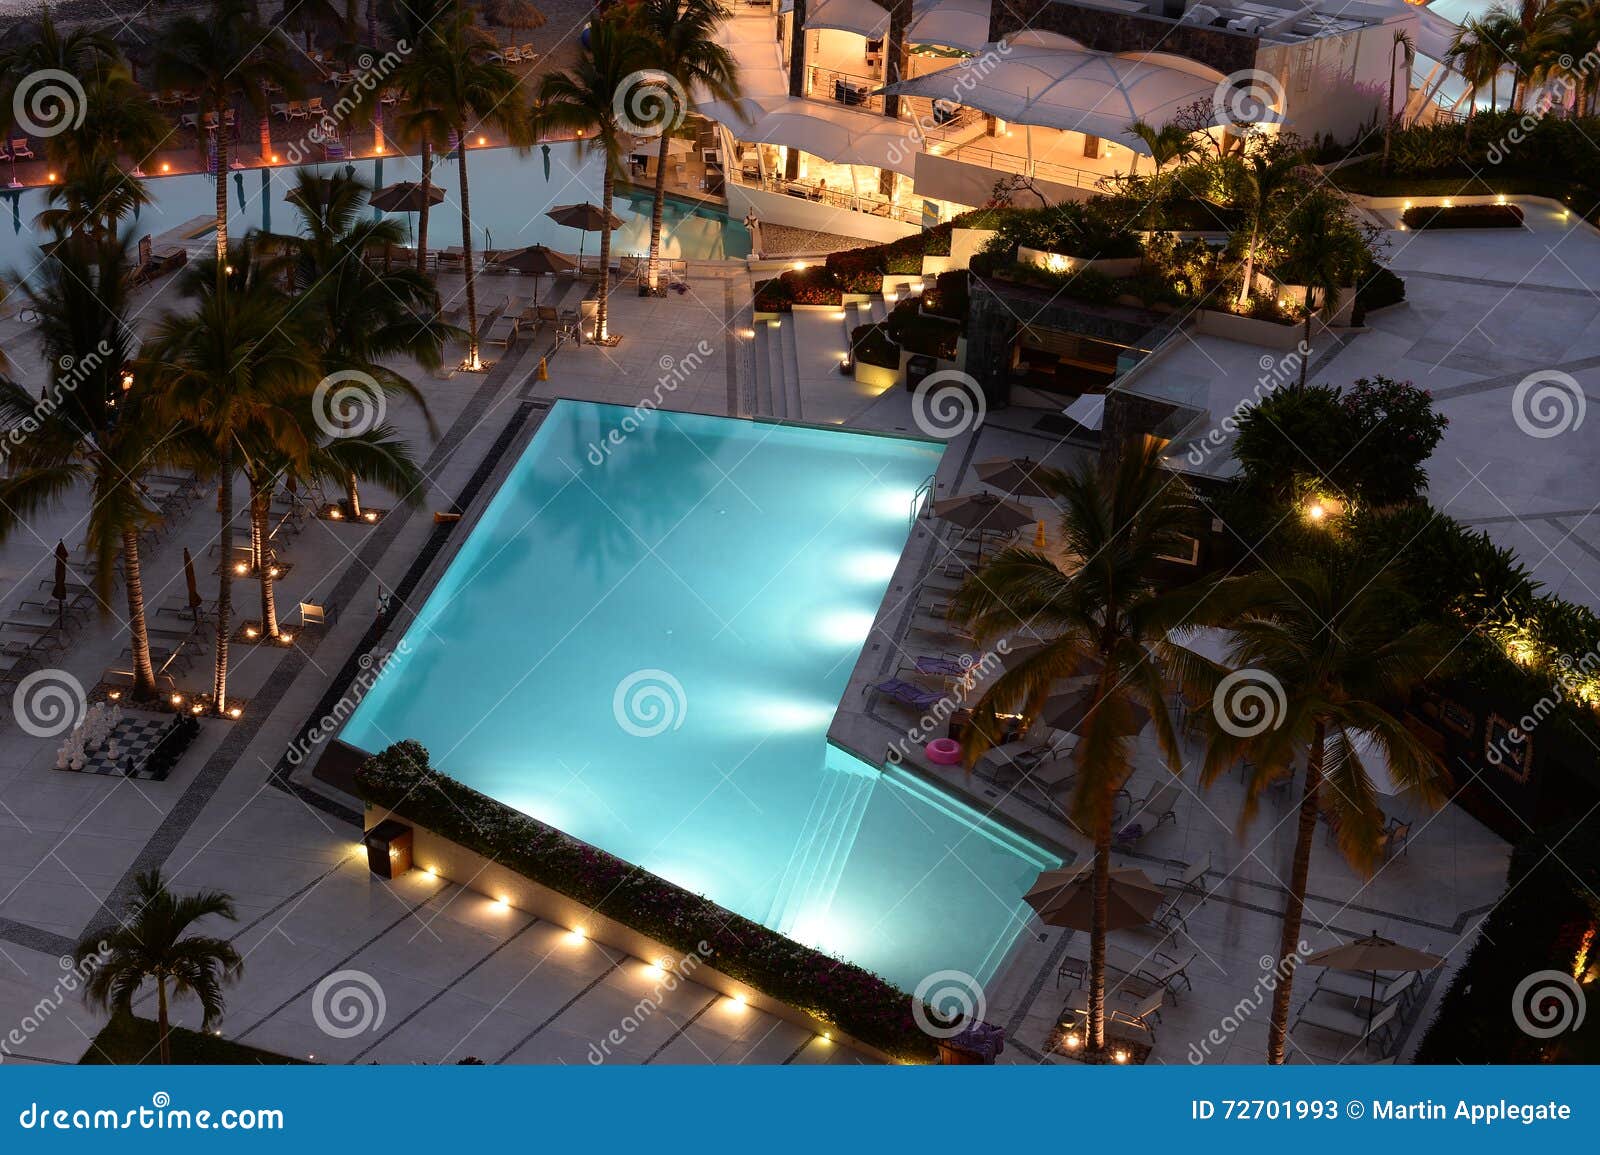 luxury hotel swimming pools